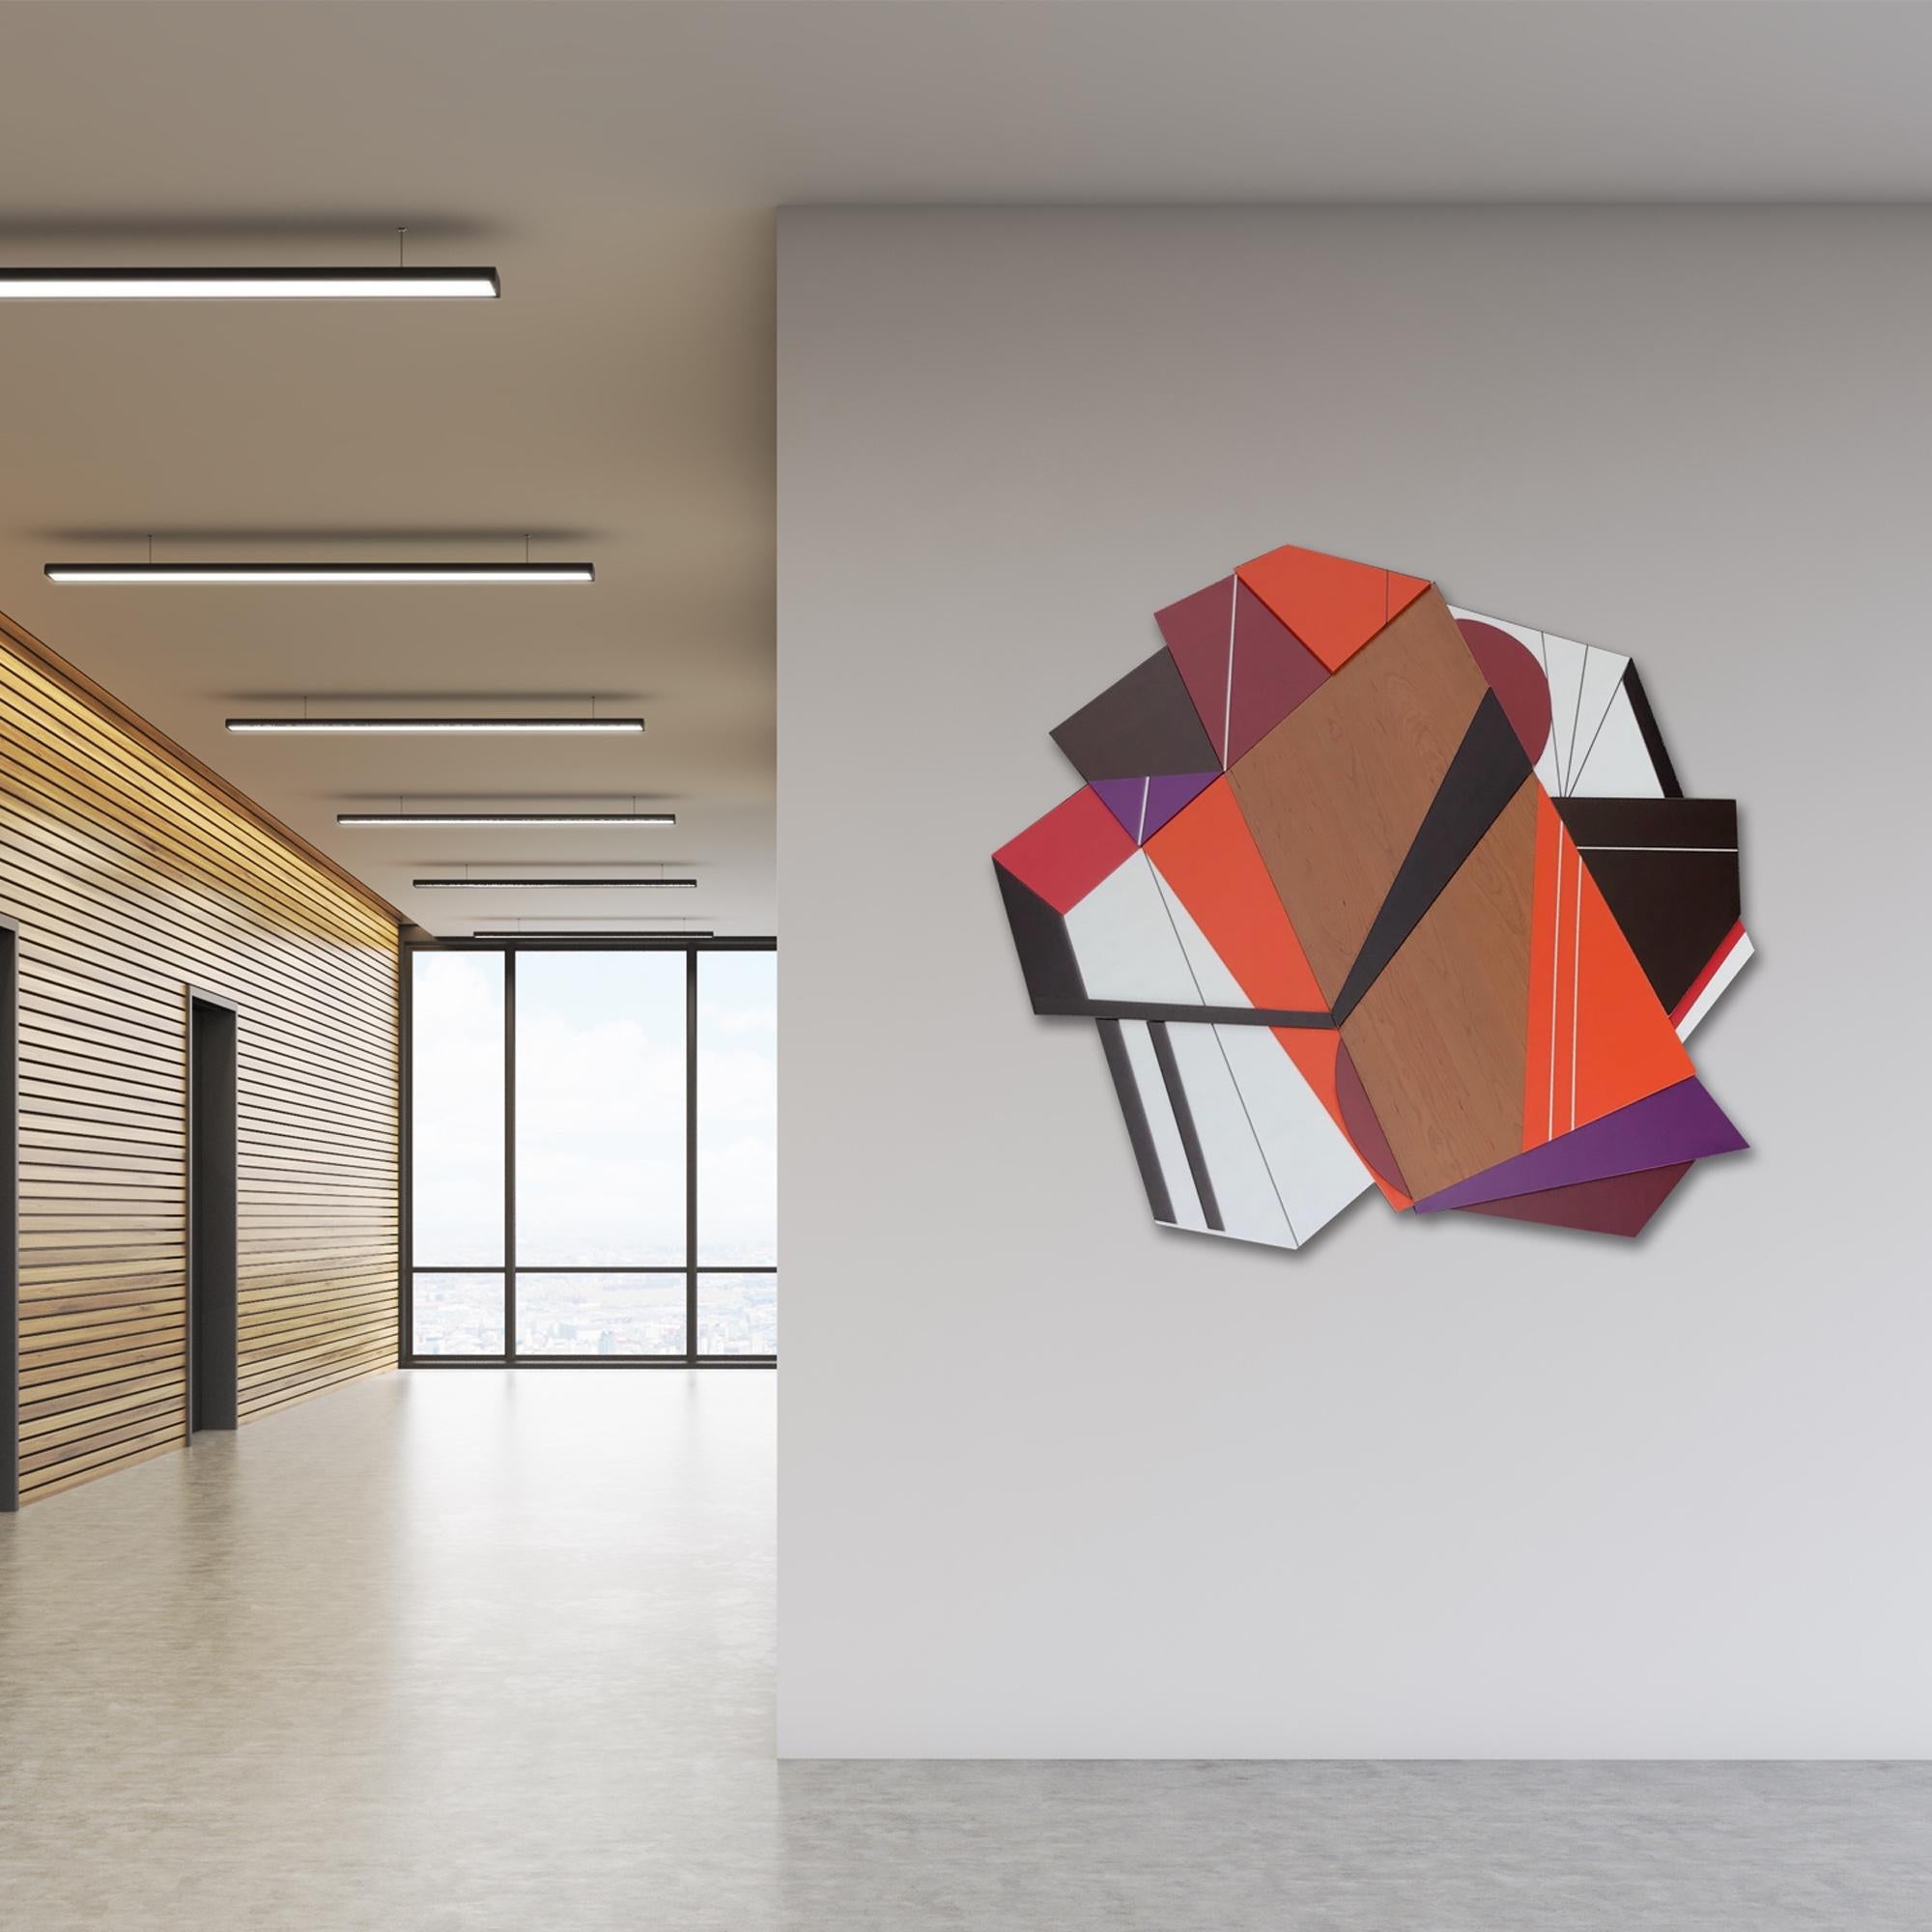 Achtung III (modern abstract wall sculpture minimal geometric design wood art) - Painting by Scott Troxel